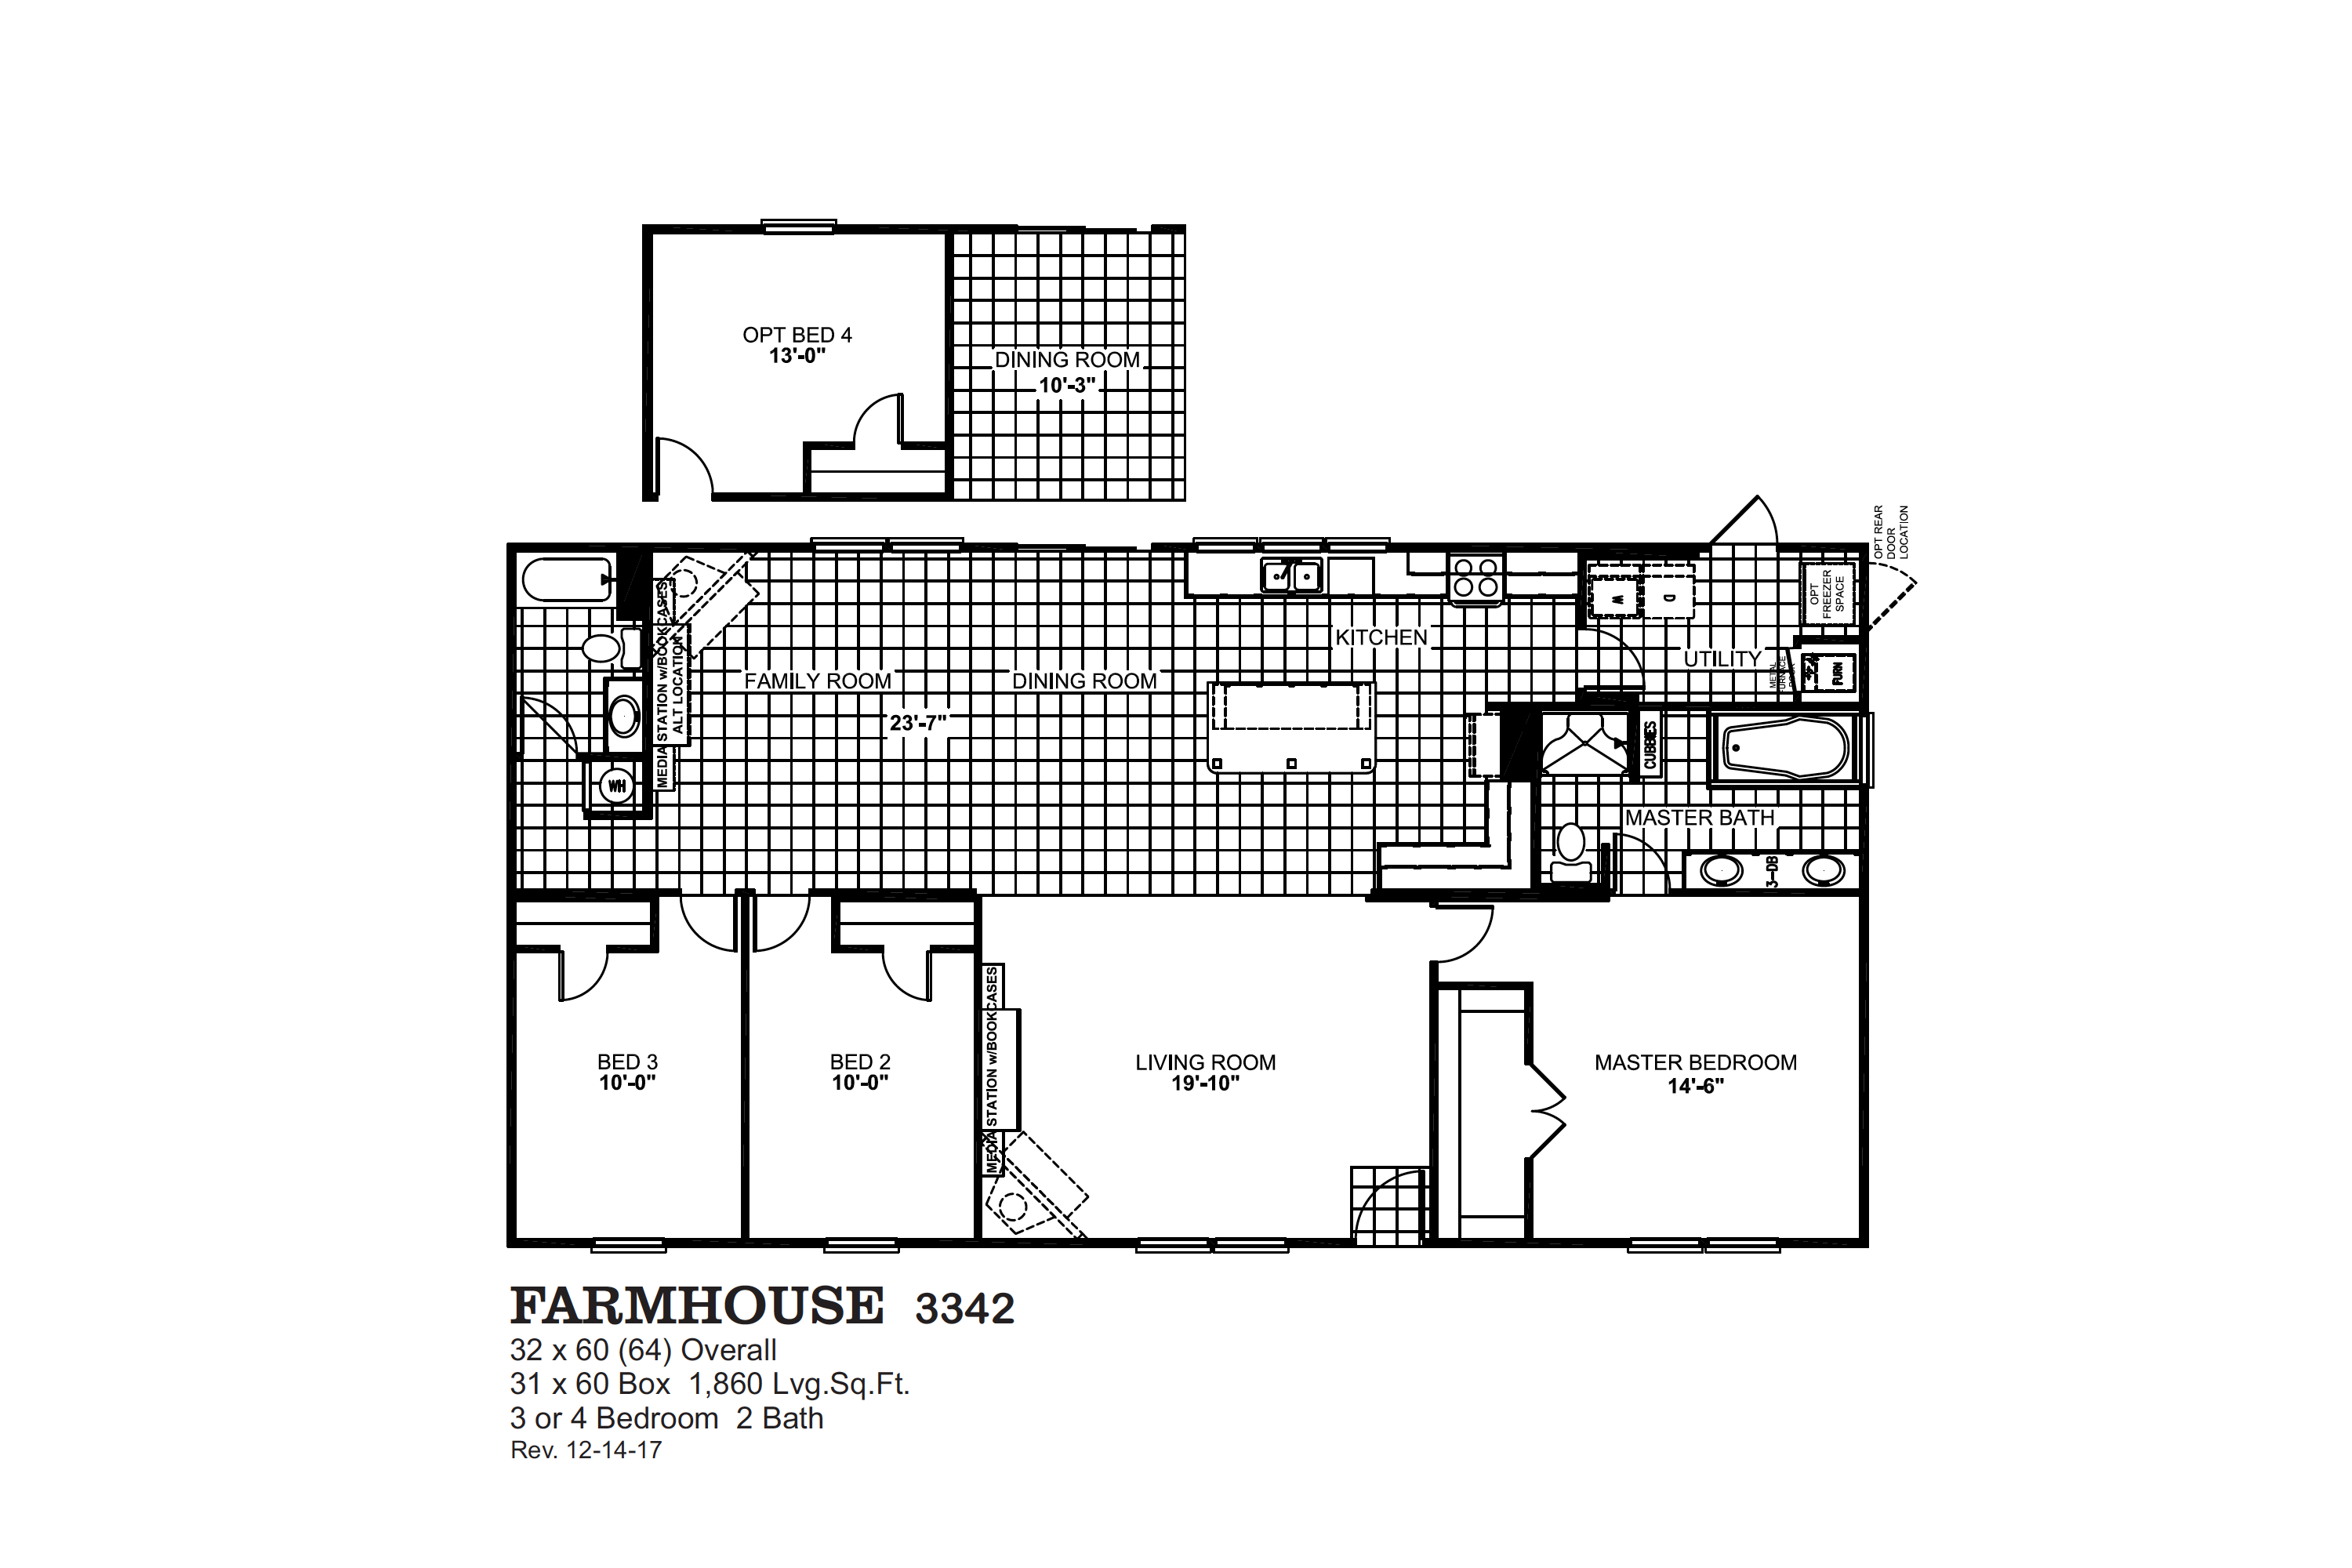 Farmhouse 3342 Floorplan